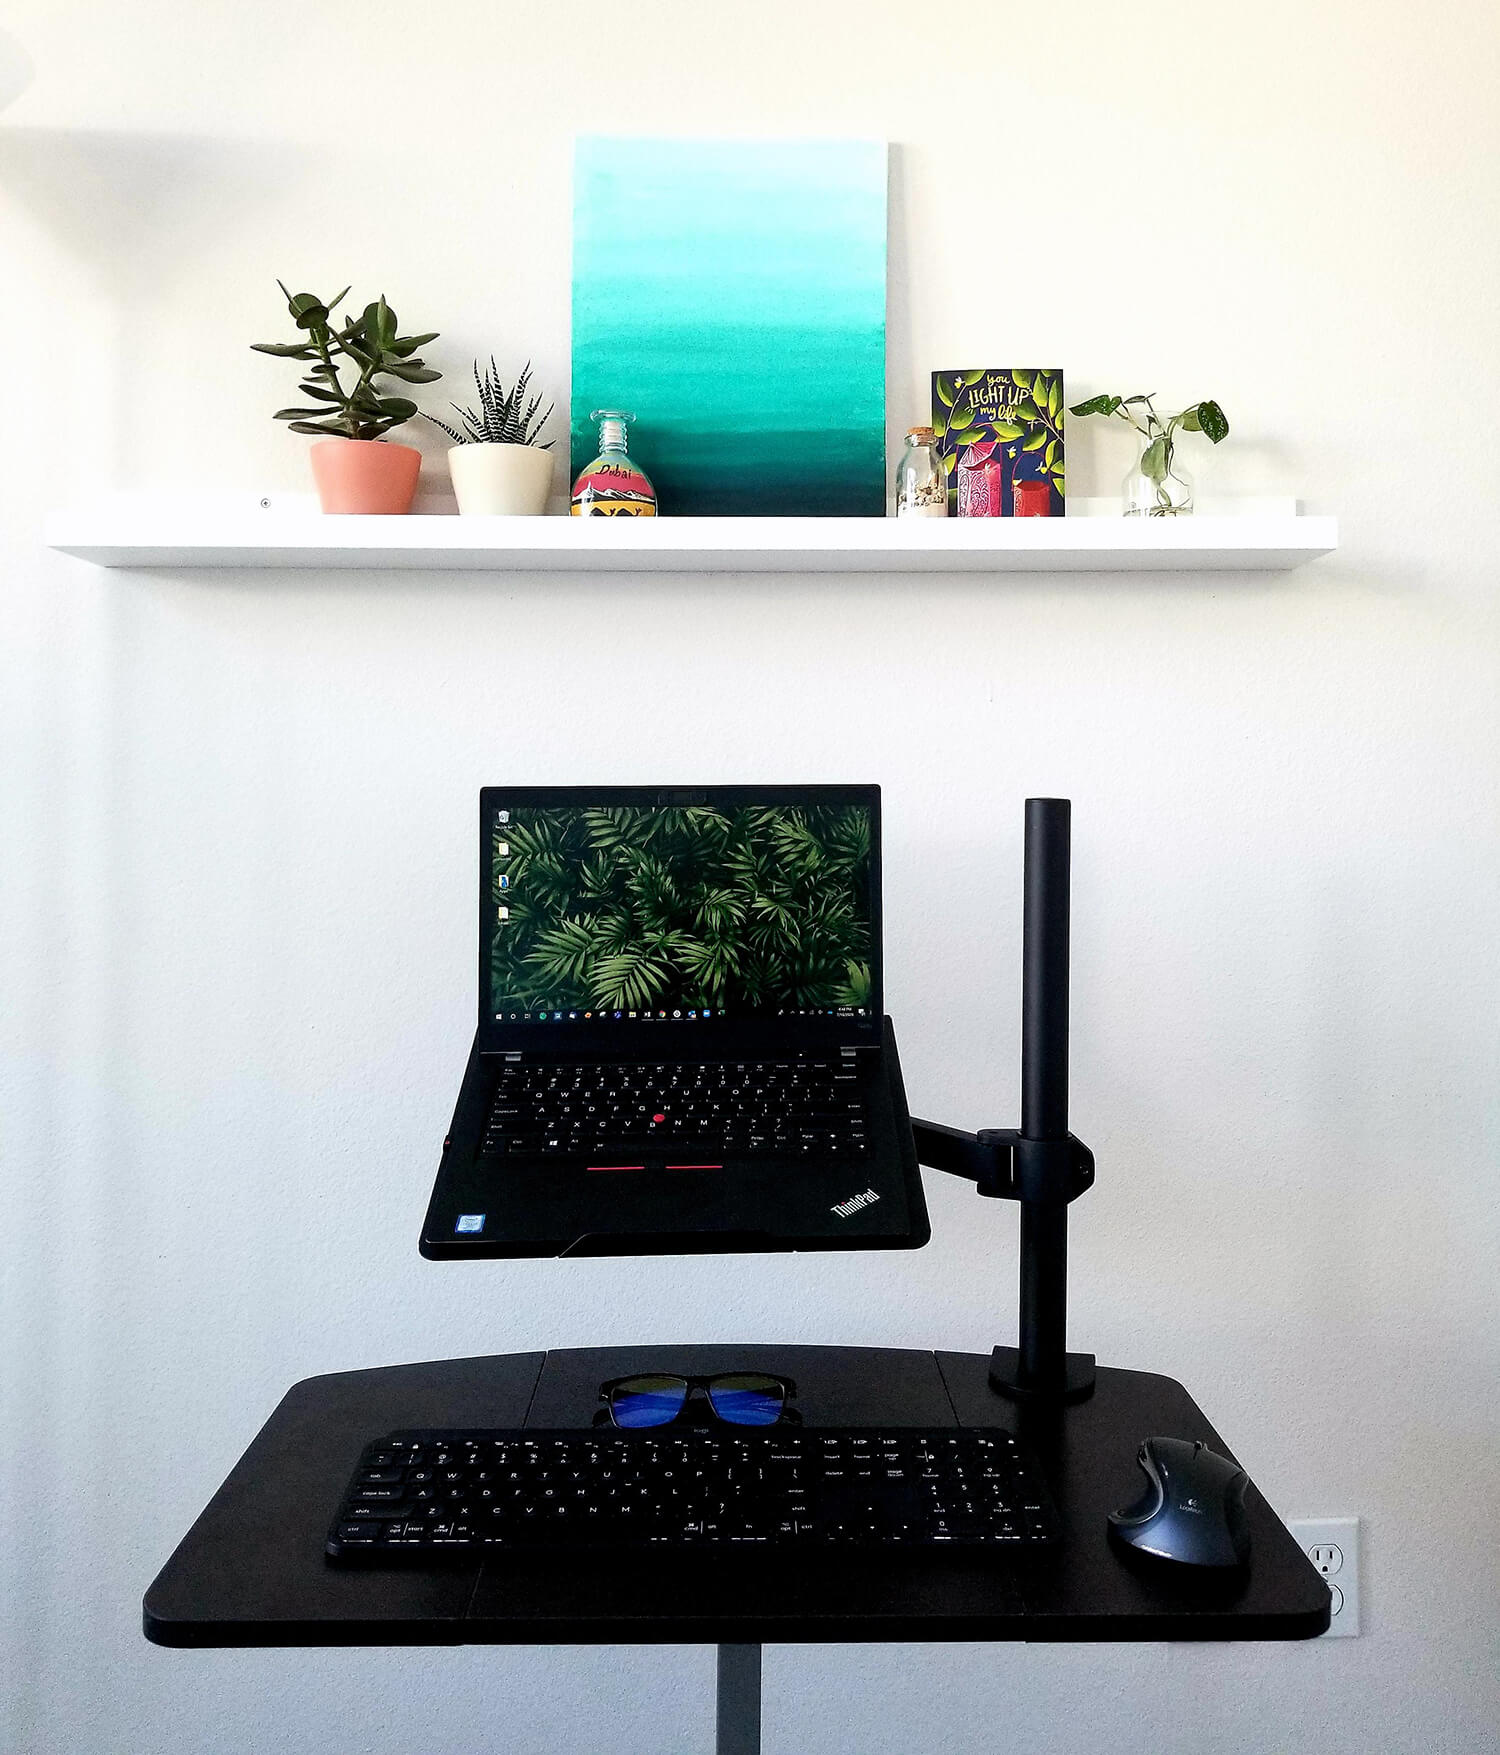 Make-shift WFH desk setup with a portable desk and laptop stand